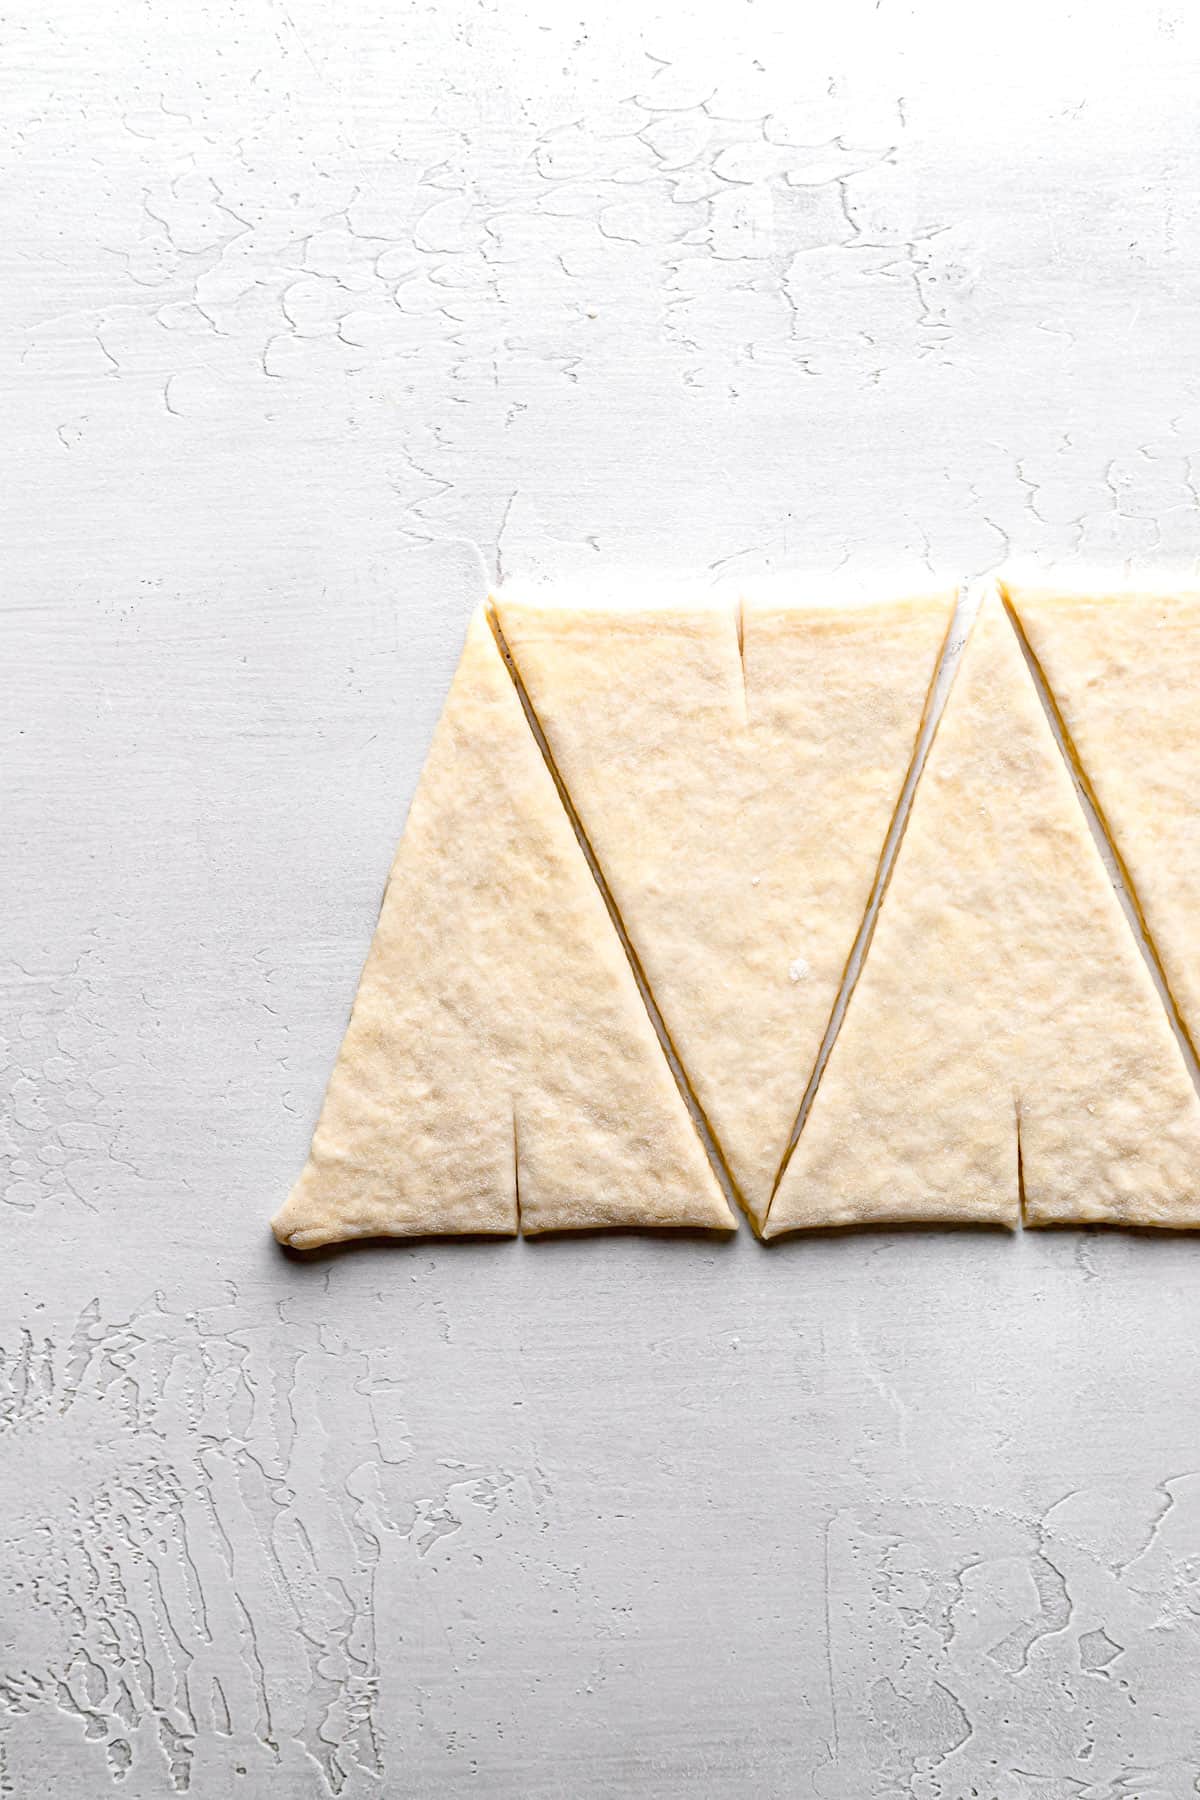 croissant dough cut into triangles.